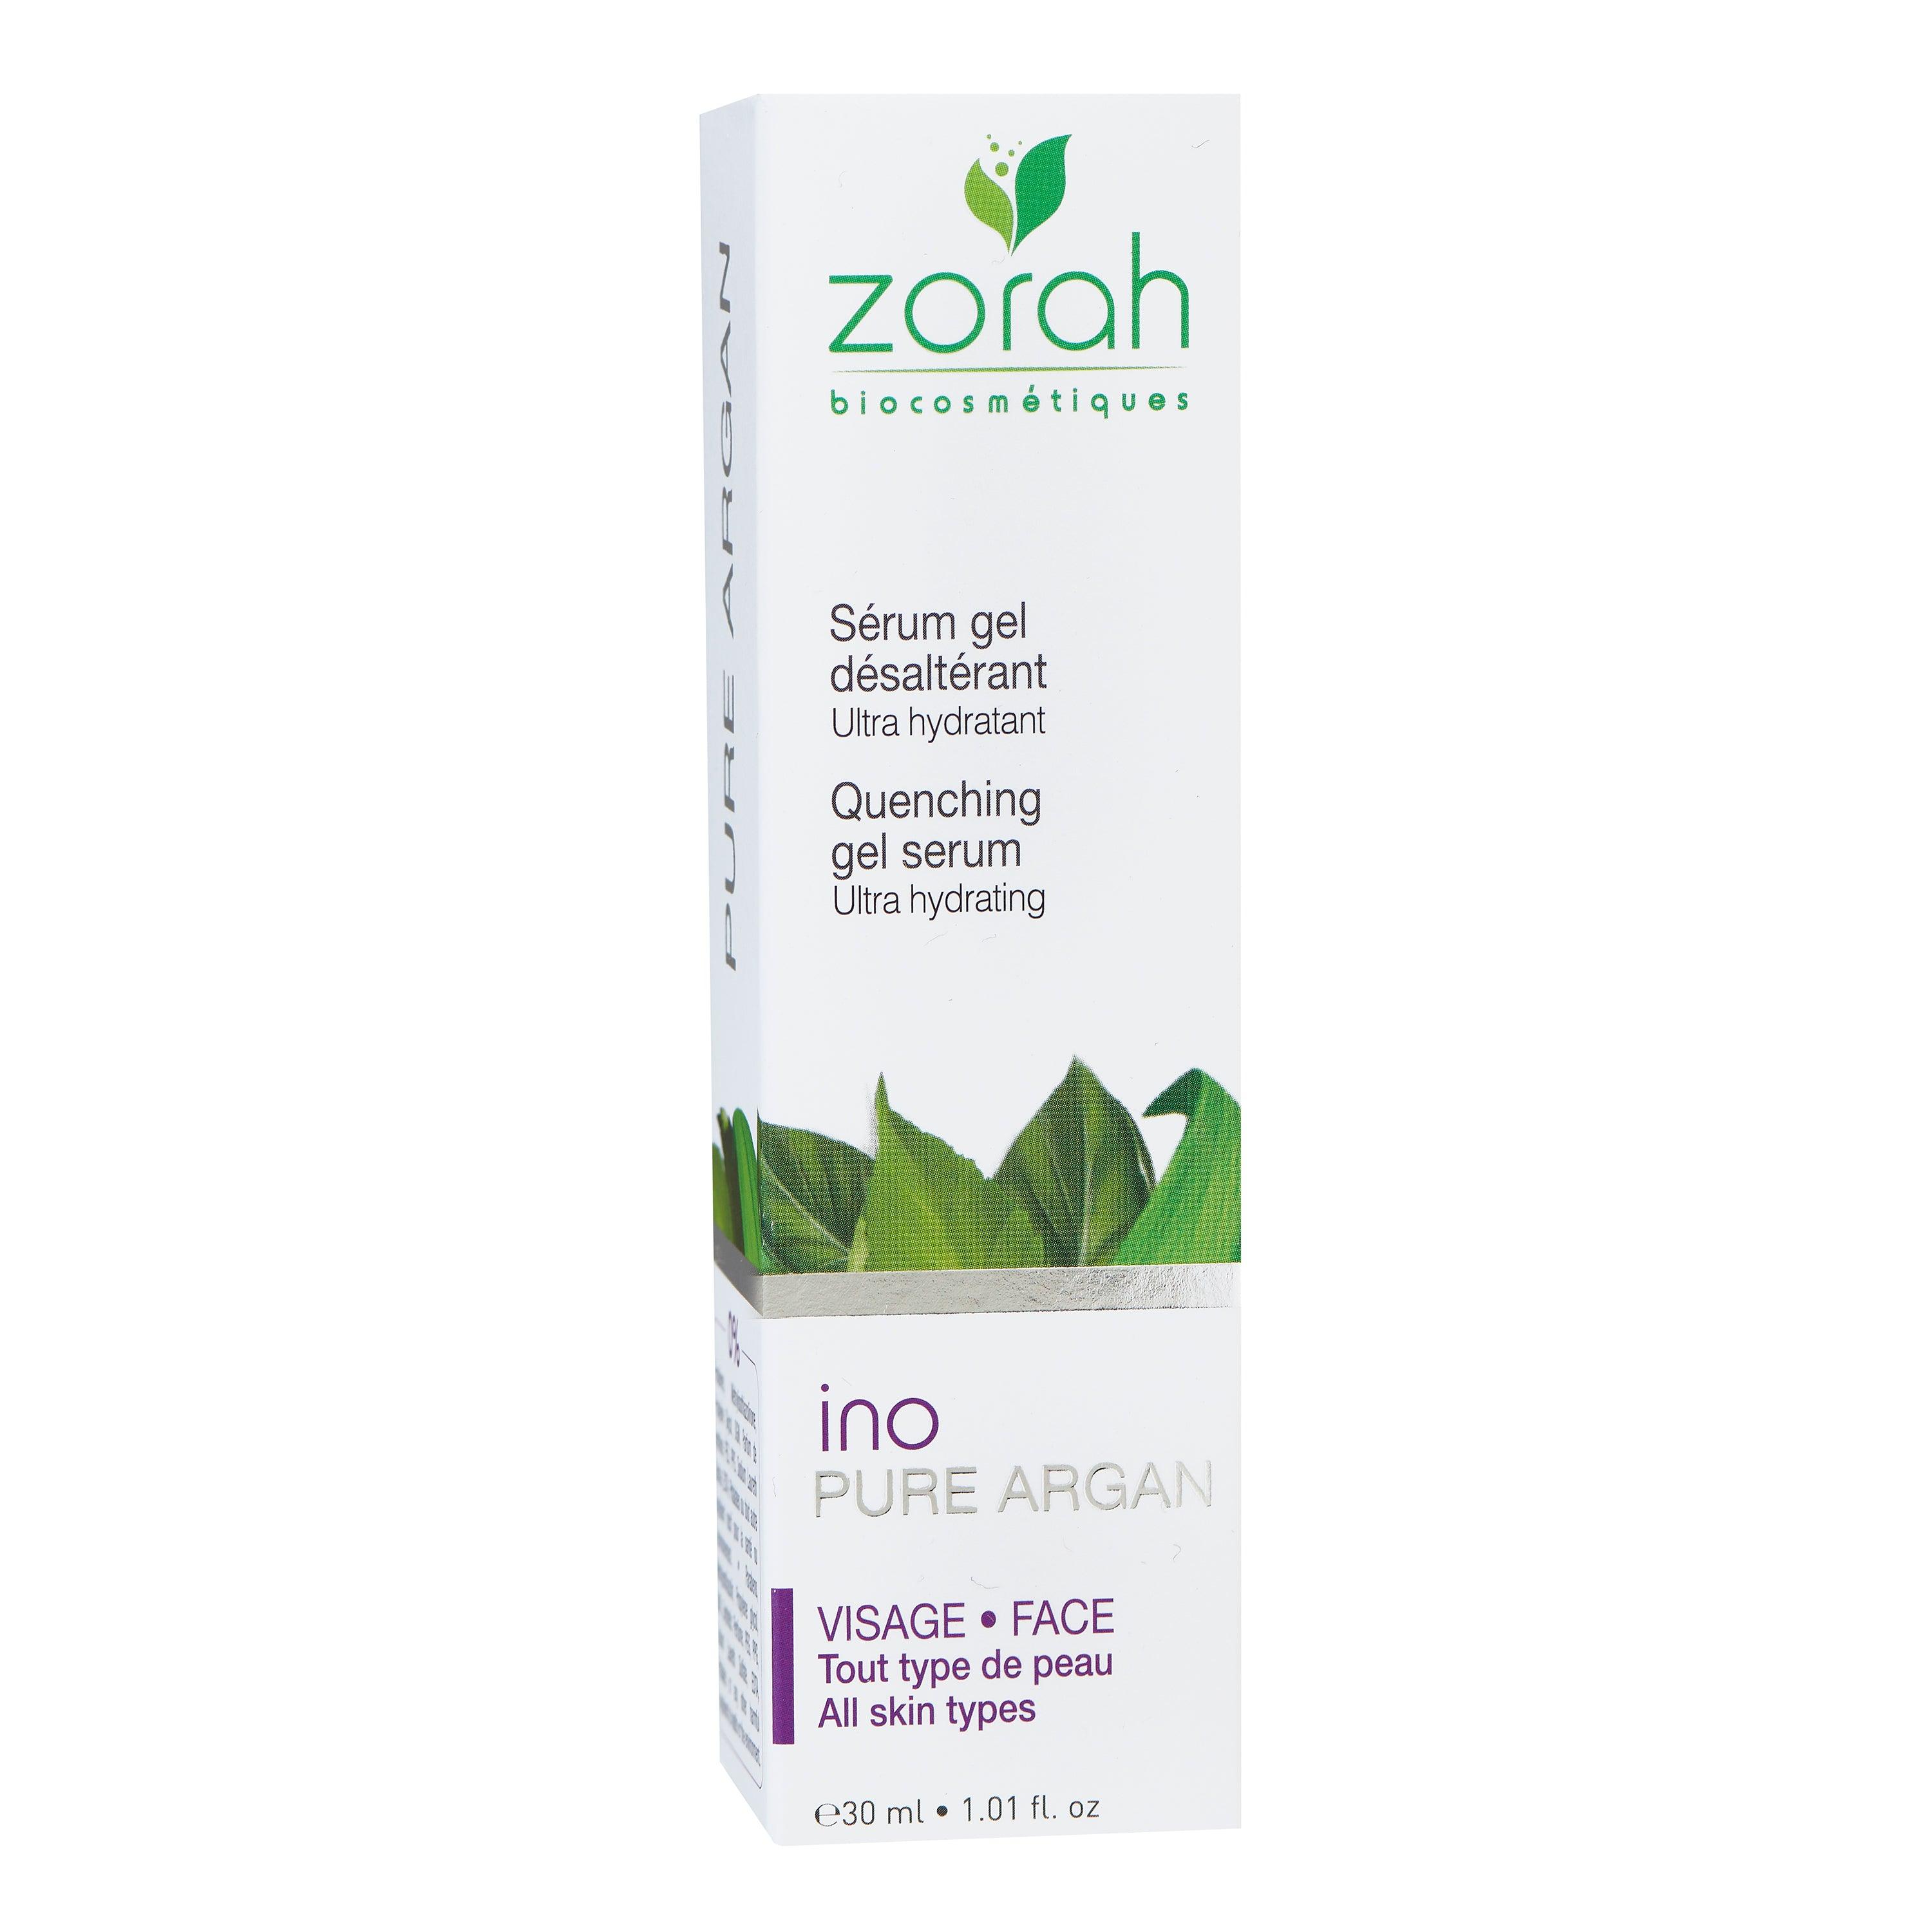 ino | ultra-moisturizing, quenching gel serum - Zorah biocosmétiques